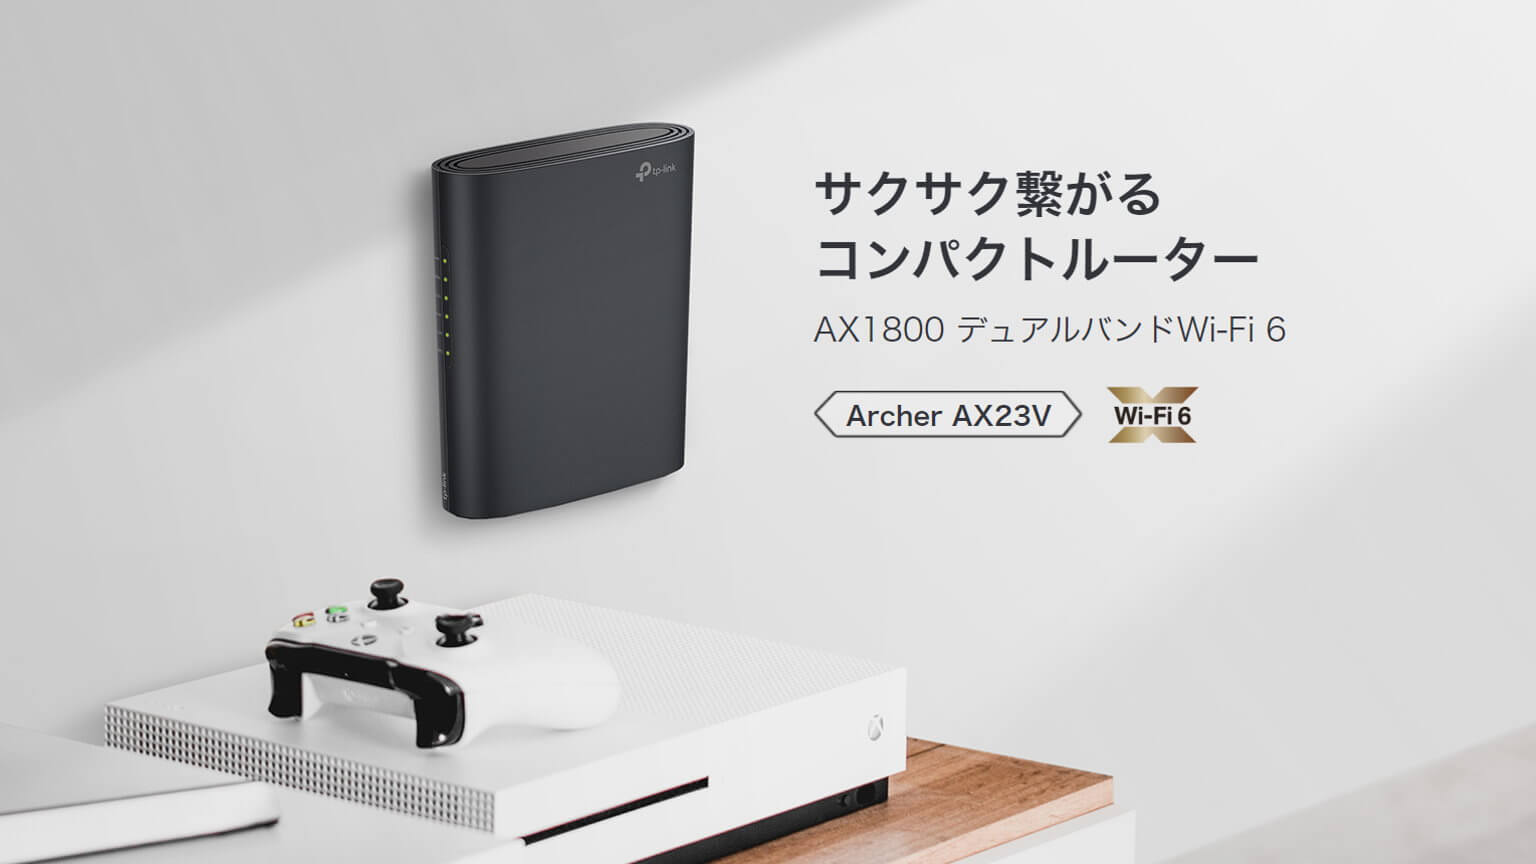 【PRレビュー】TP-Link Archer AX23V | AX1800 デュアルバンドWi-Fi 6ルーター